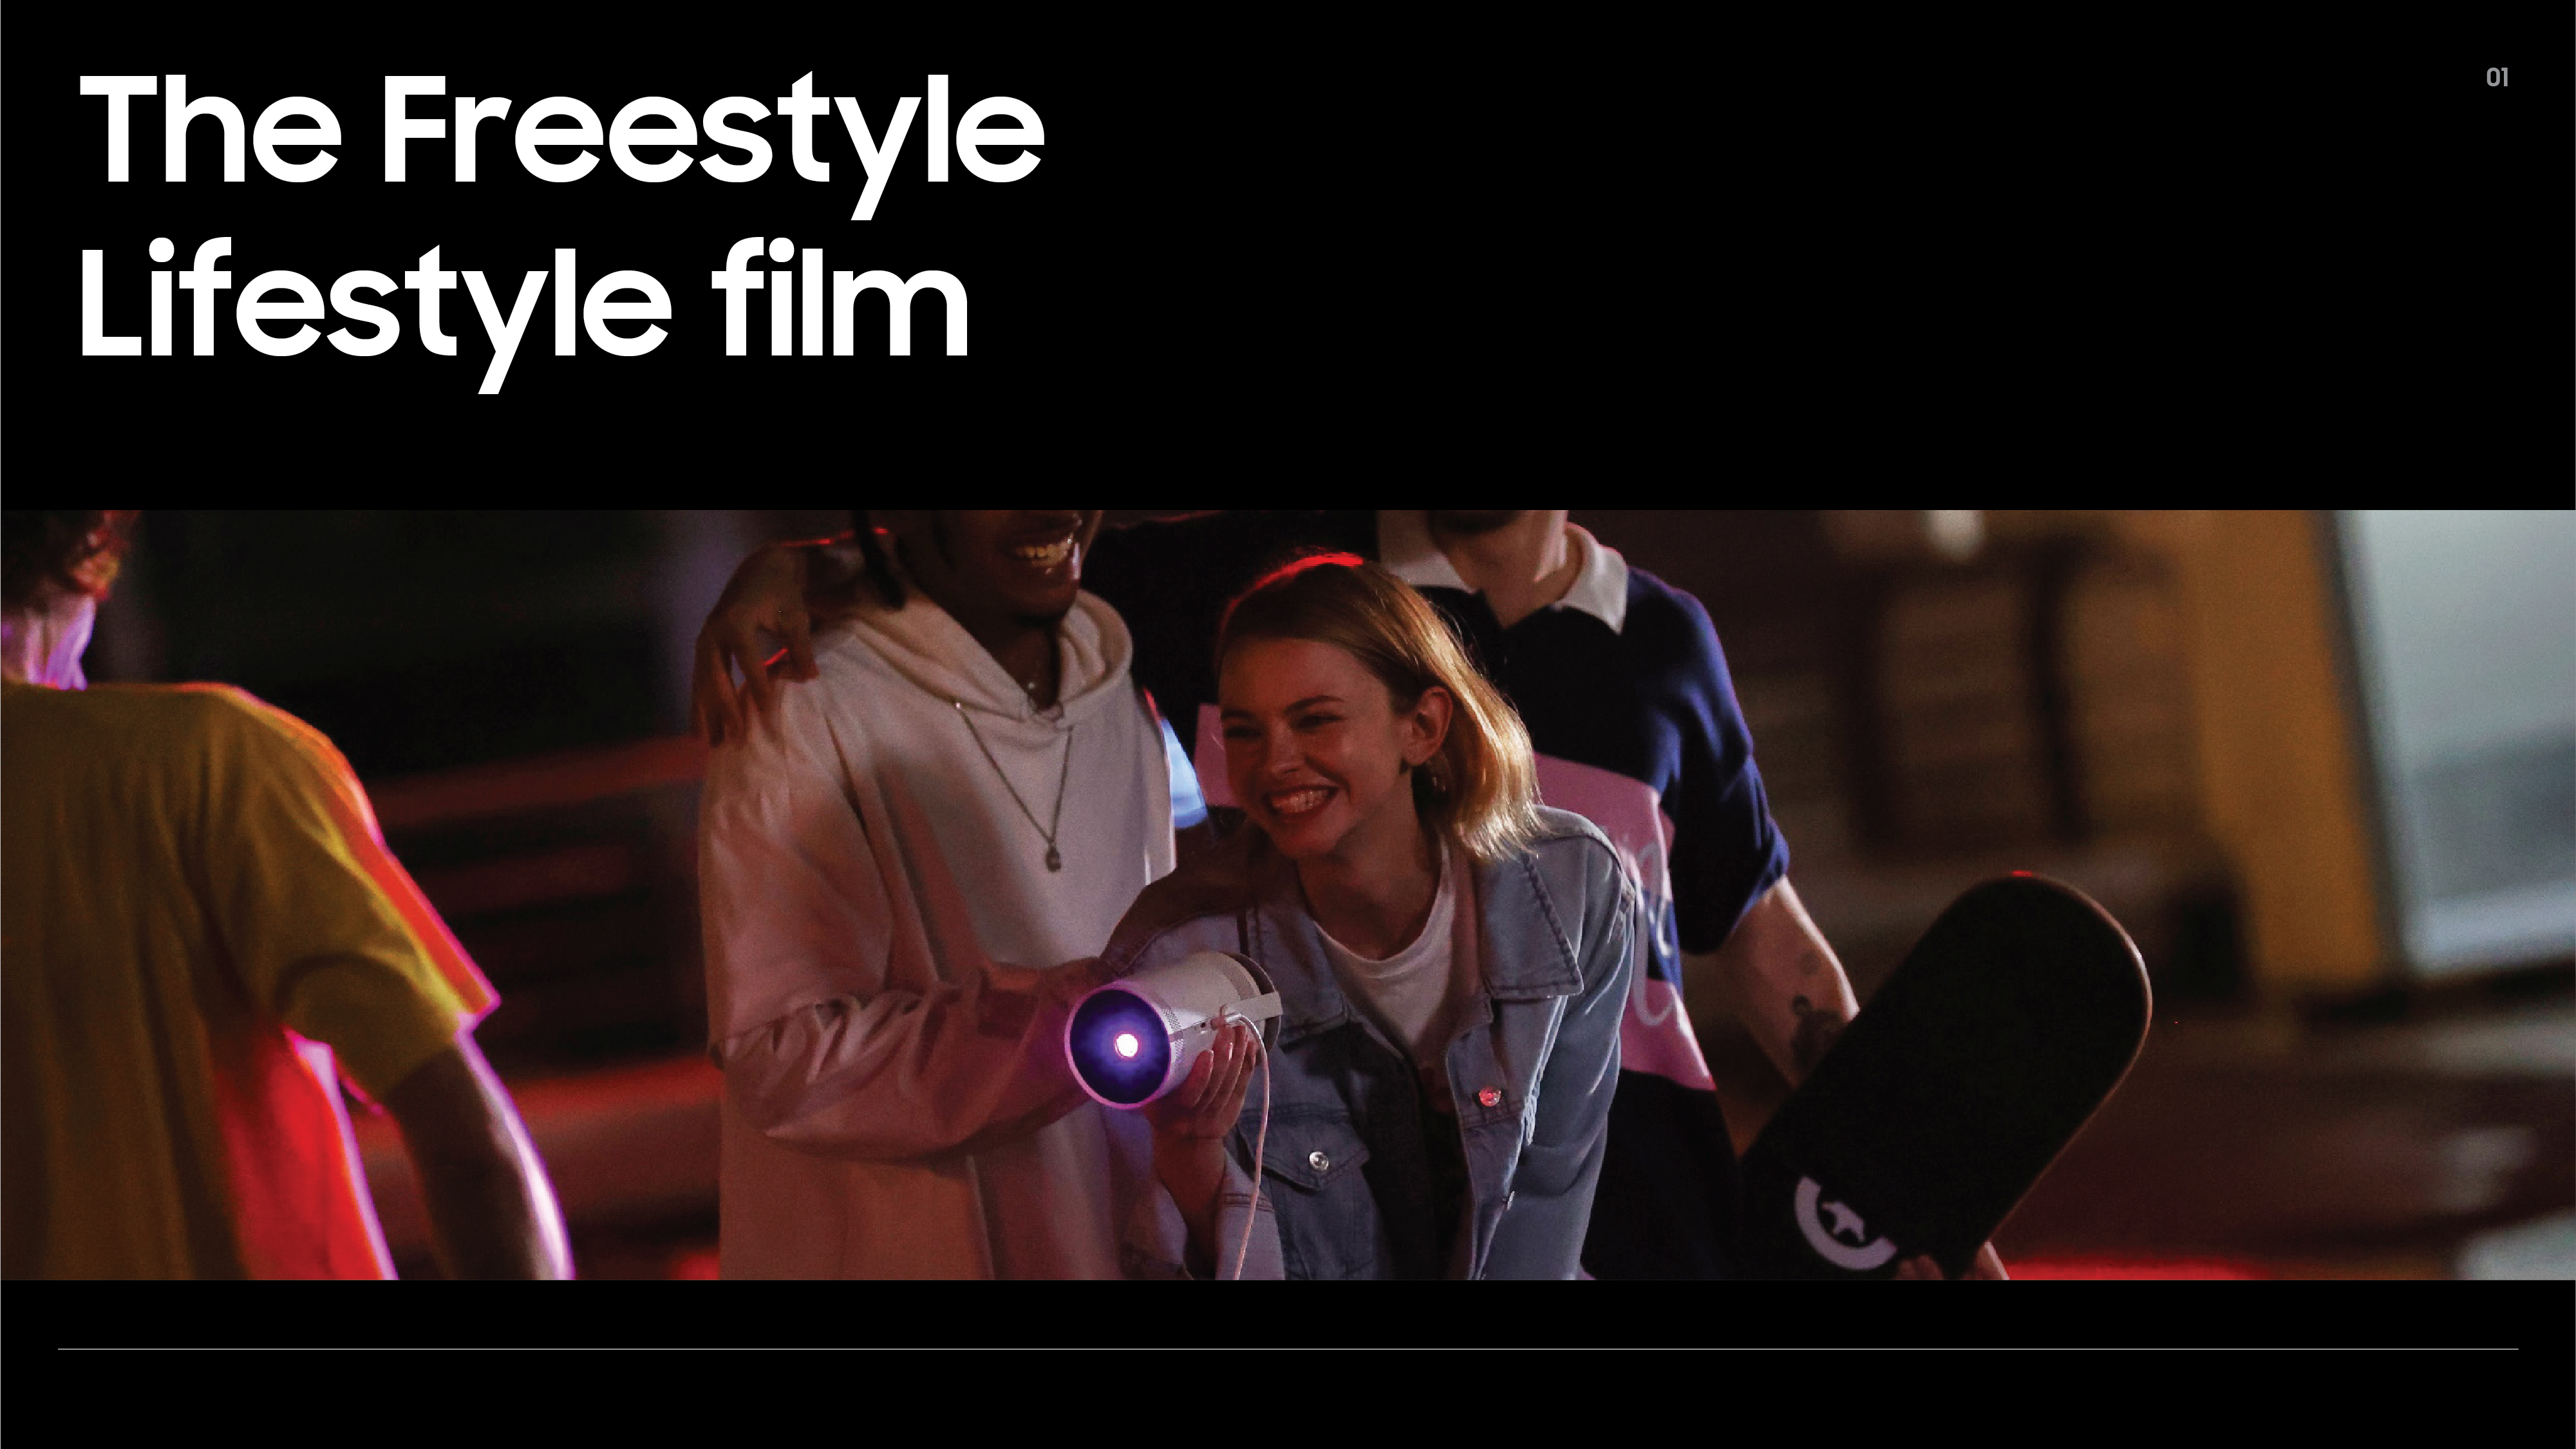 The Freestyle Lifestyle film